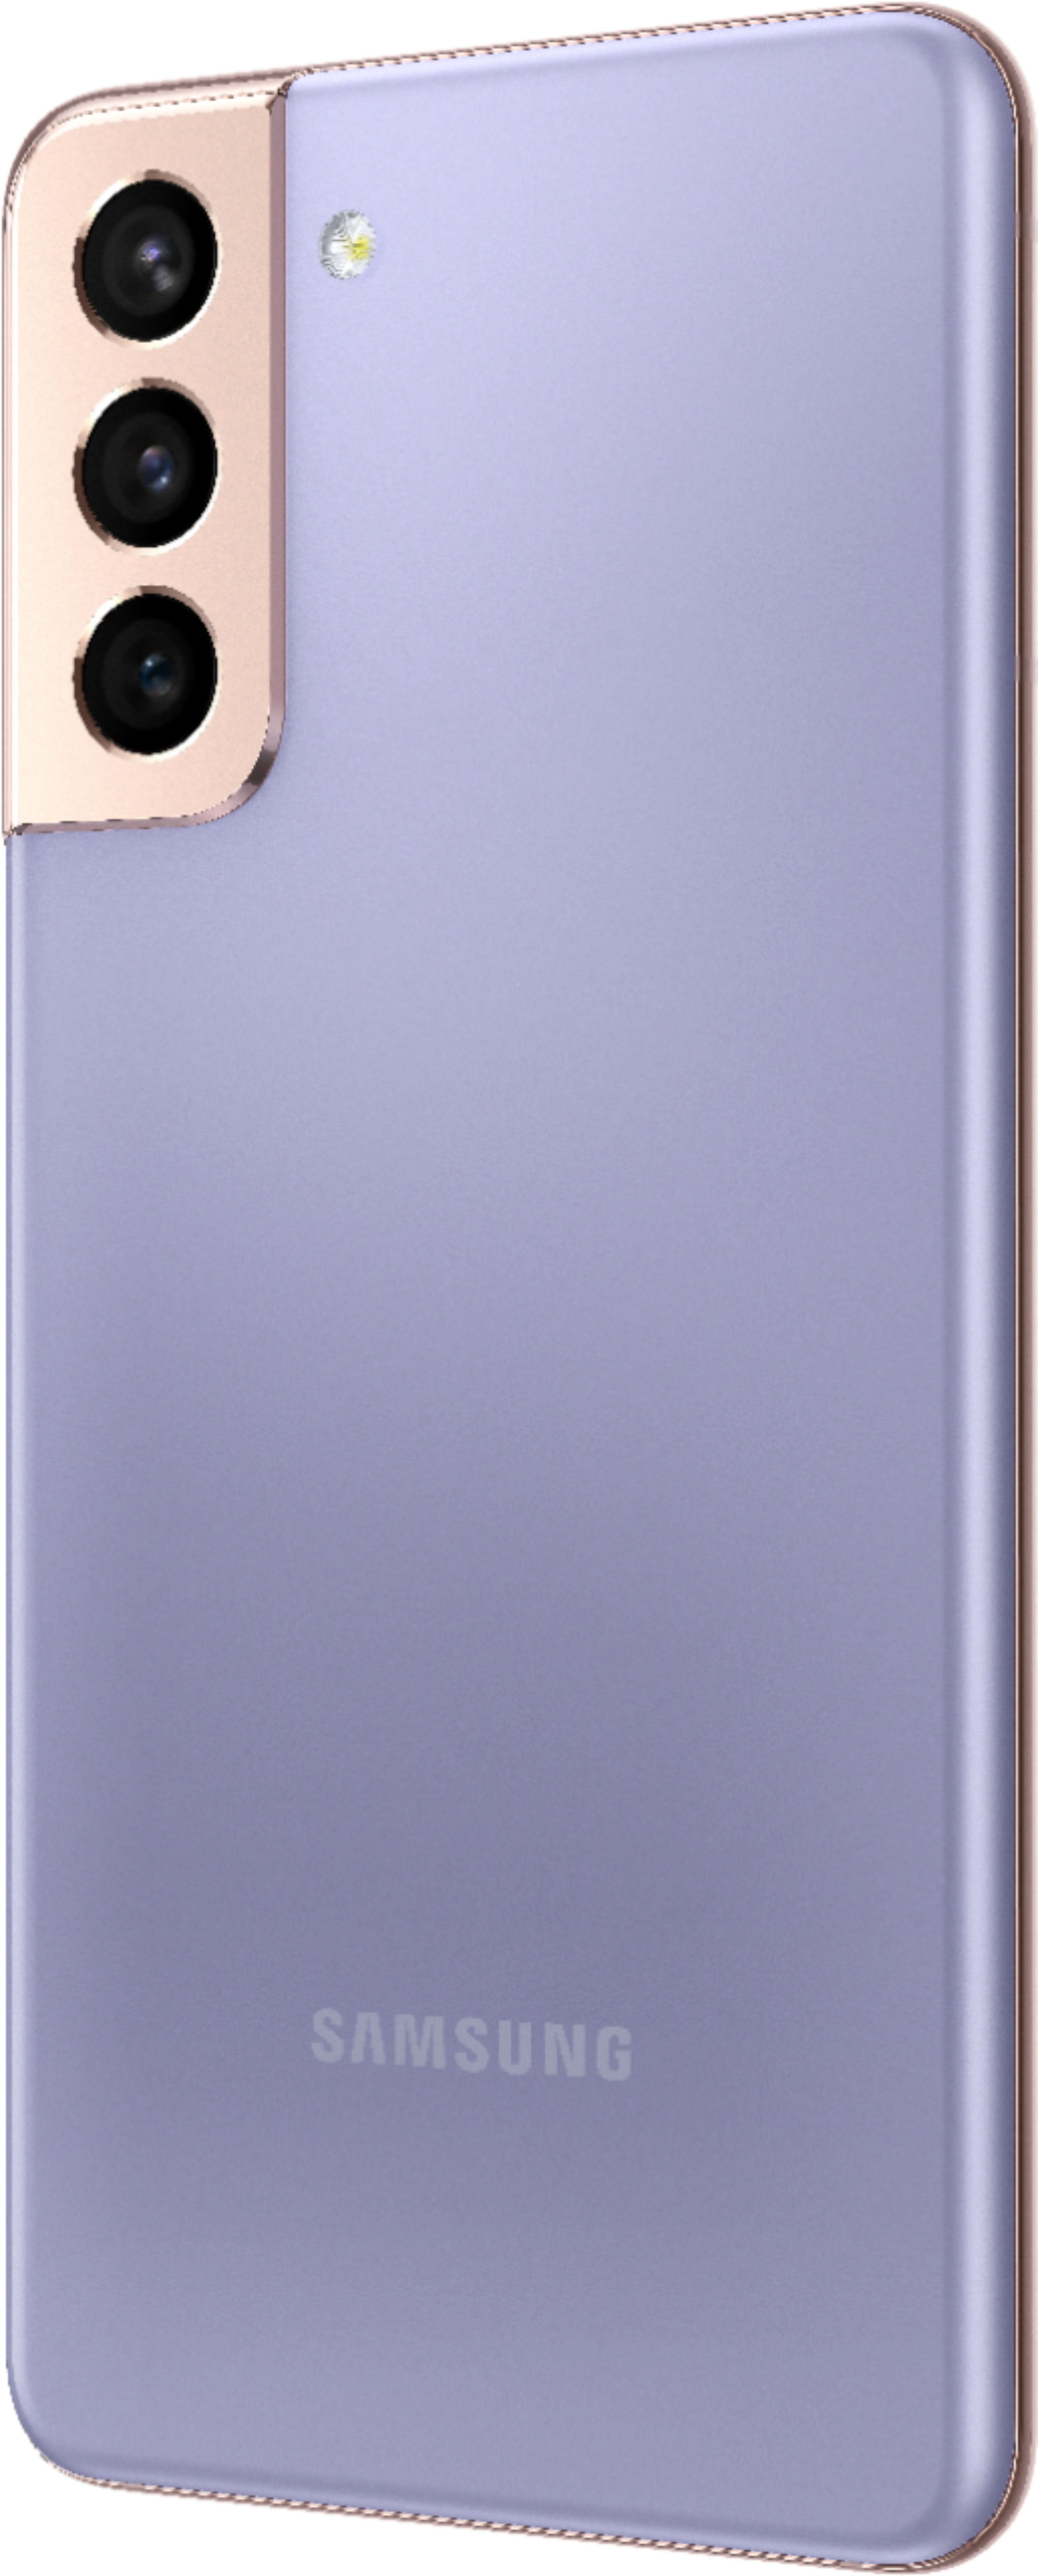 Best Buy: Samsung Galaxy S21 5G 128GB (Unlocked) Phantom Violet  SM-G991UZVAXAA